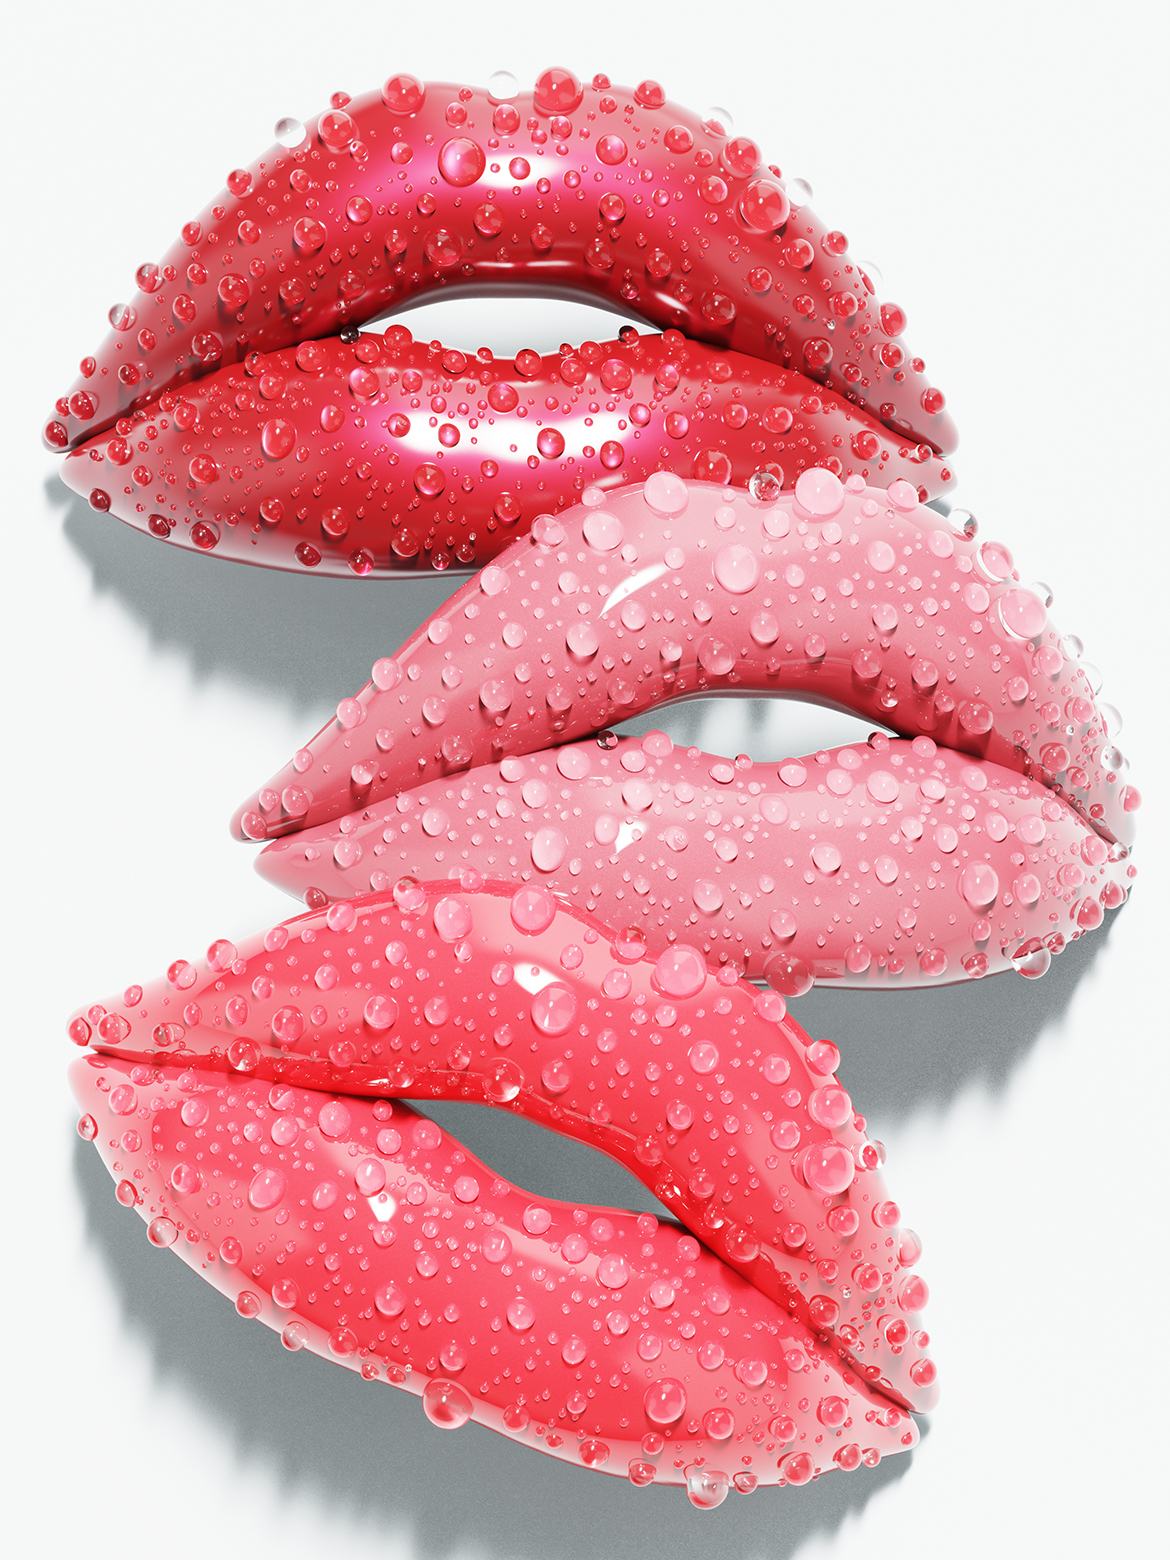 applying pink lipstick